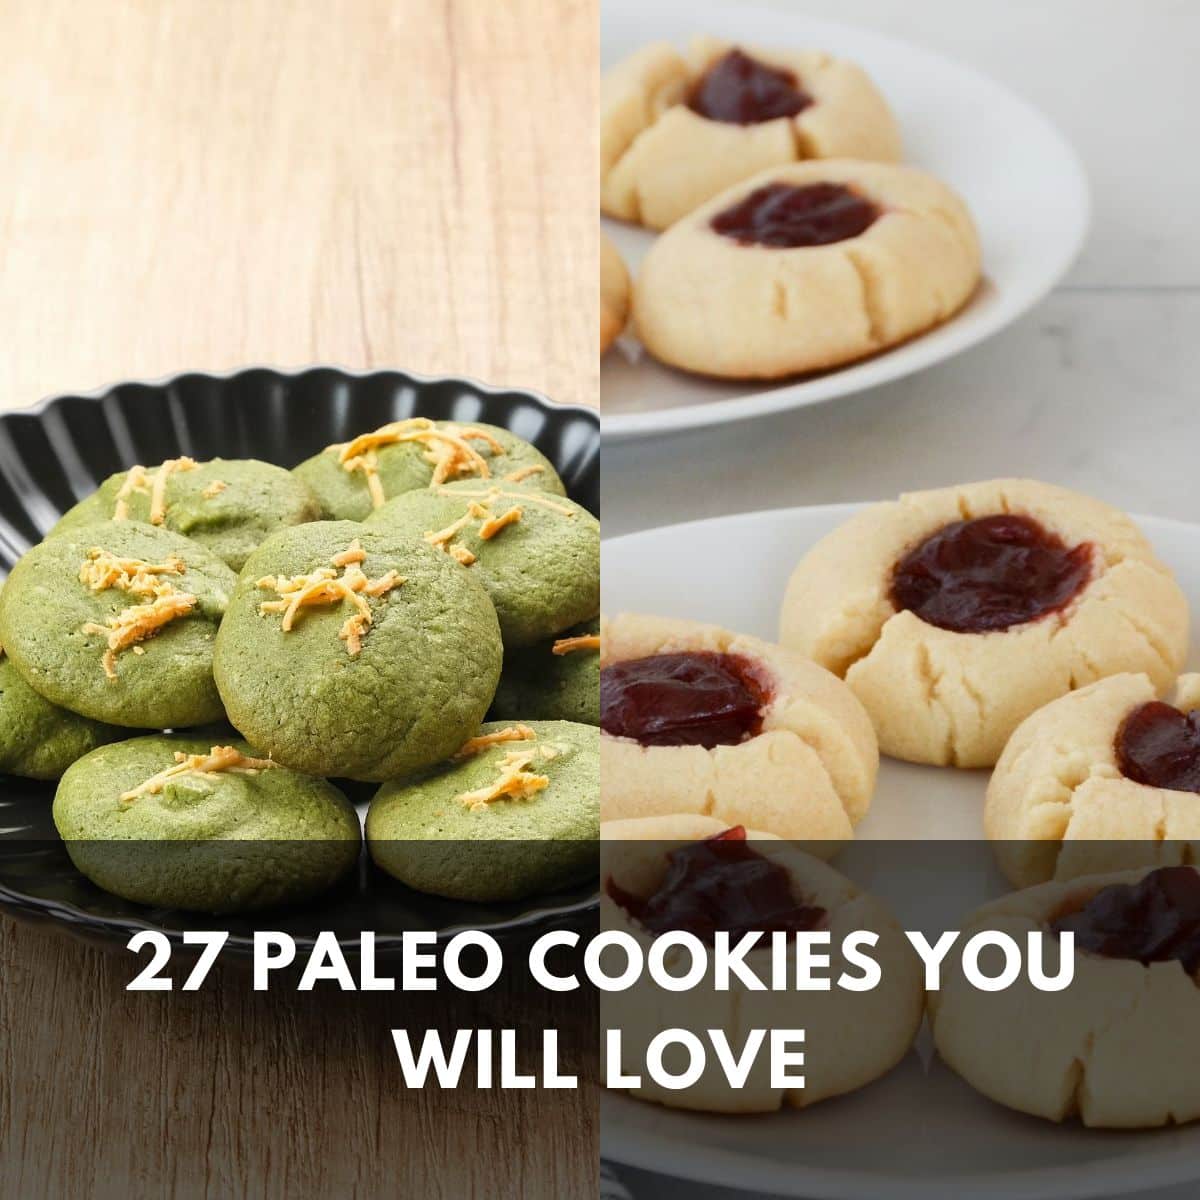 27 paleo cookies you will love main